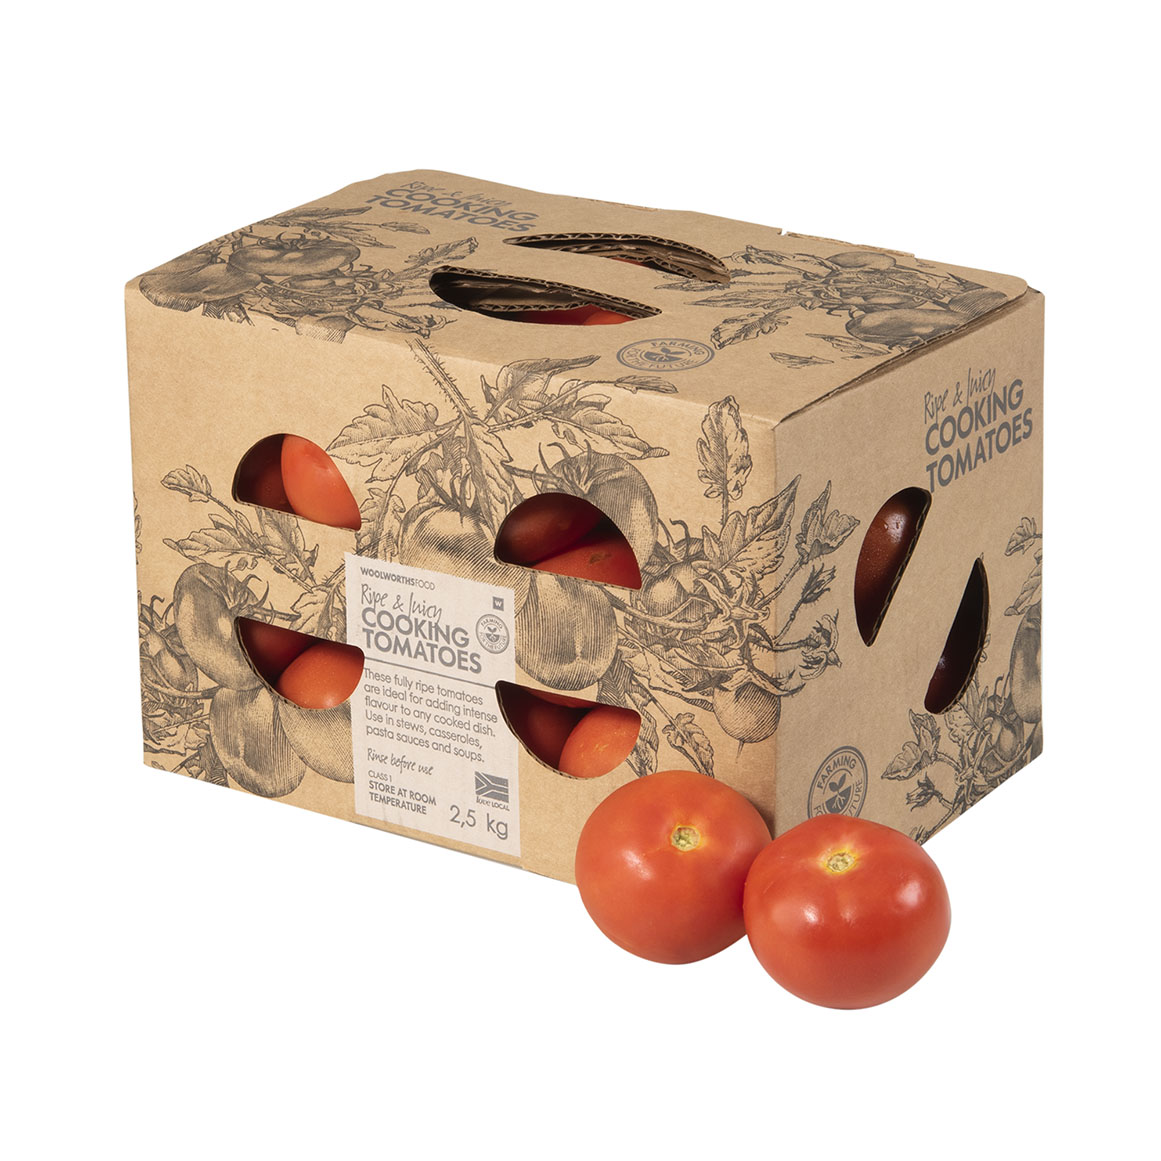 Cooking Tomatoes 2 5 Kg 6009217001255 ?V=zNzB&o=eyJidWNrZXQiOiJ3dy1vbmxpbmUtaW1hZ2UtcmVzaXplIiwia2V5IjoiaW1hZ2VzL2VsYXN0aWNlcmEvcHJvZHVjdHMvaGVyby8yMDIxLTA2LTExLzYwMDkyMTcwMDEyNTVfaGVyby5qcGcifQ&